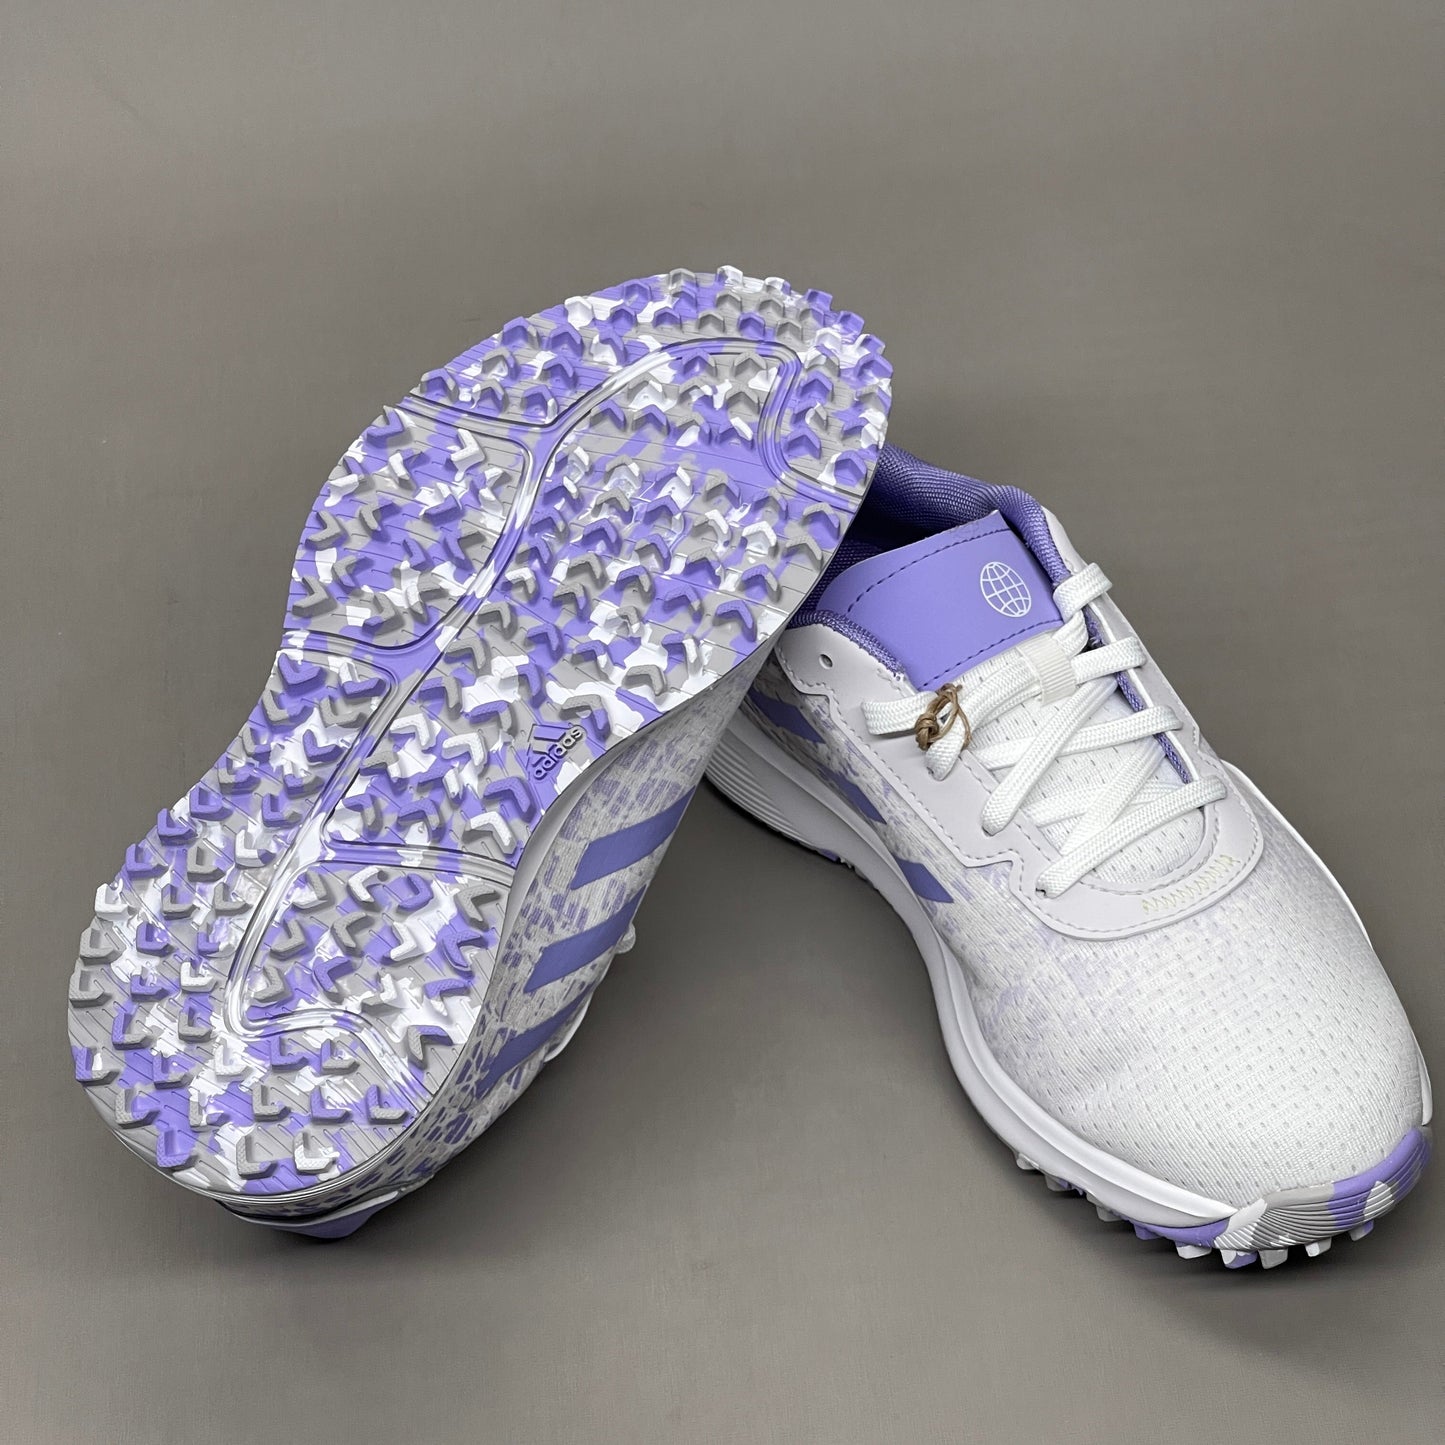 ADIDAS Golf Shoes JR S2G SL Waterproof Youth Sz 2.5 White / Lime / Purple GV9787 (New)